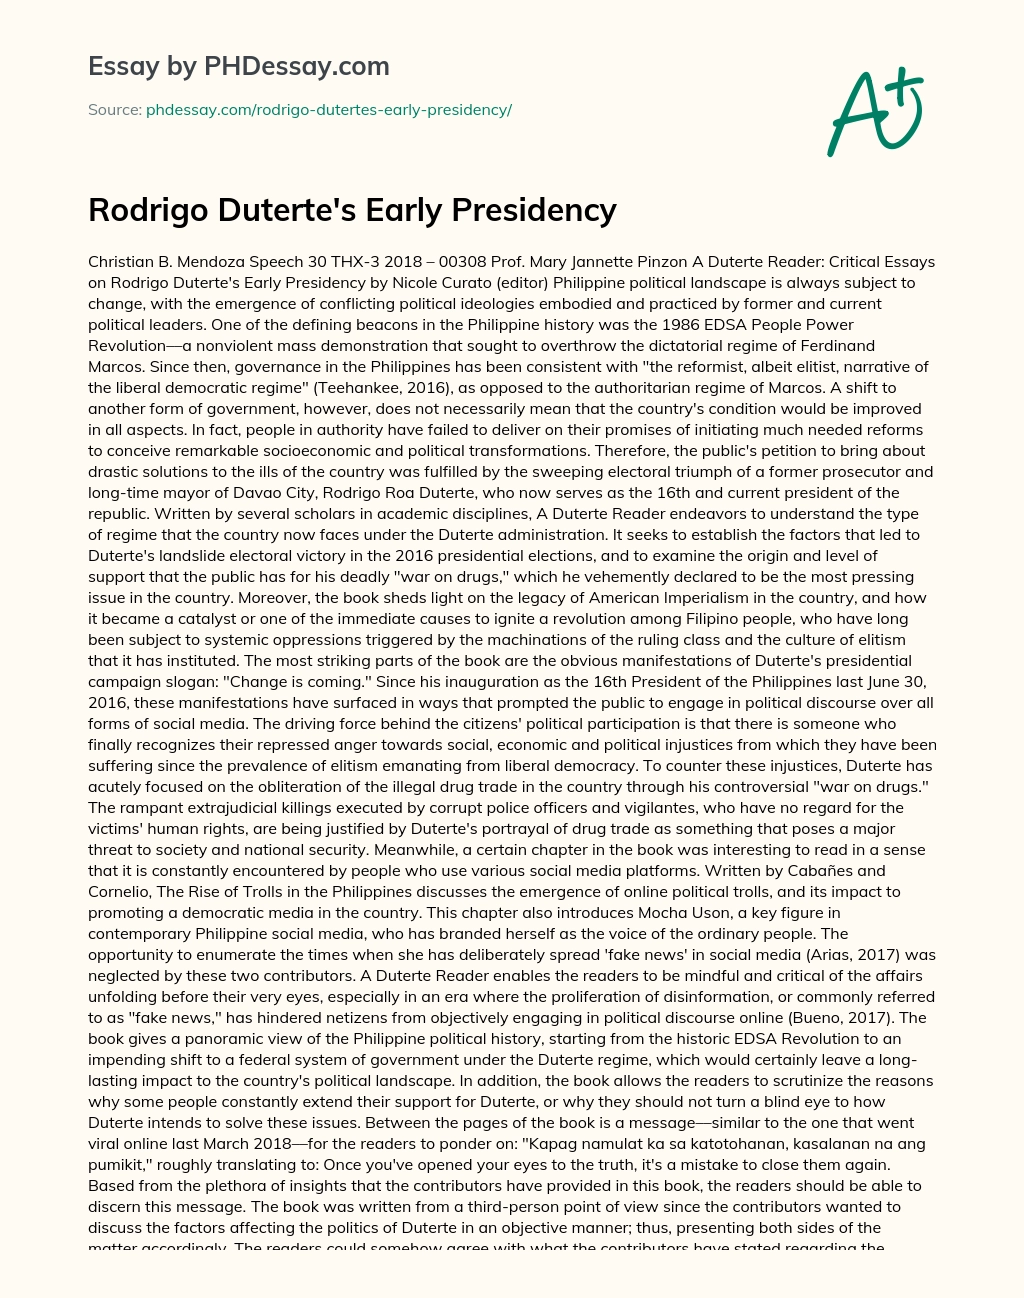 Rodrigo Duterte’s Early Presidency essay